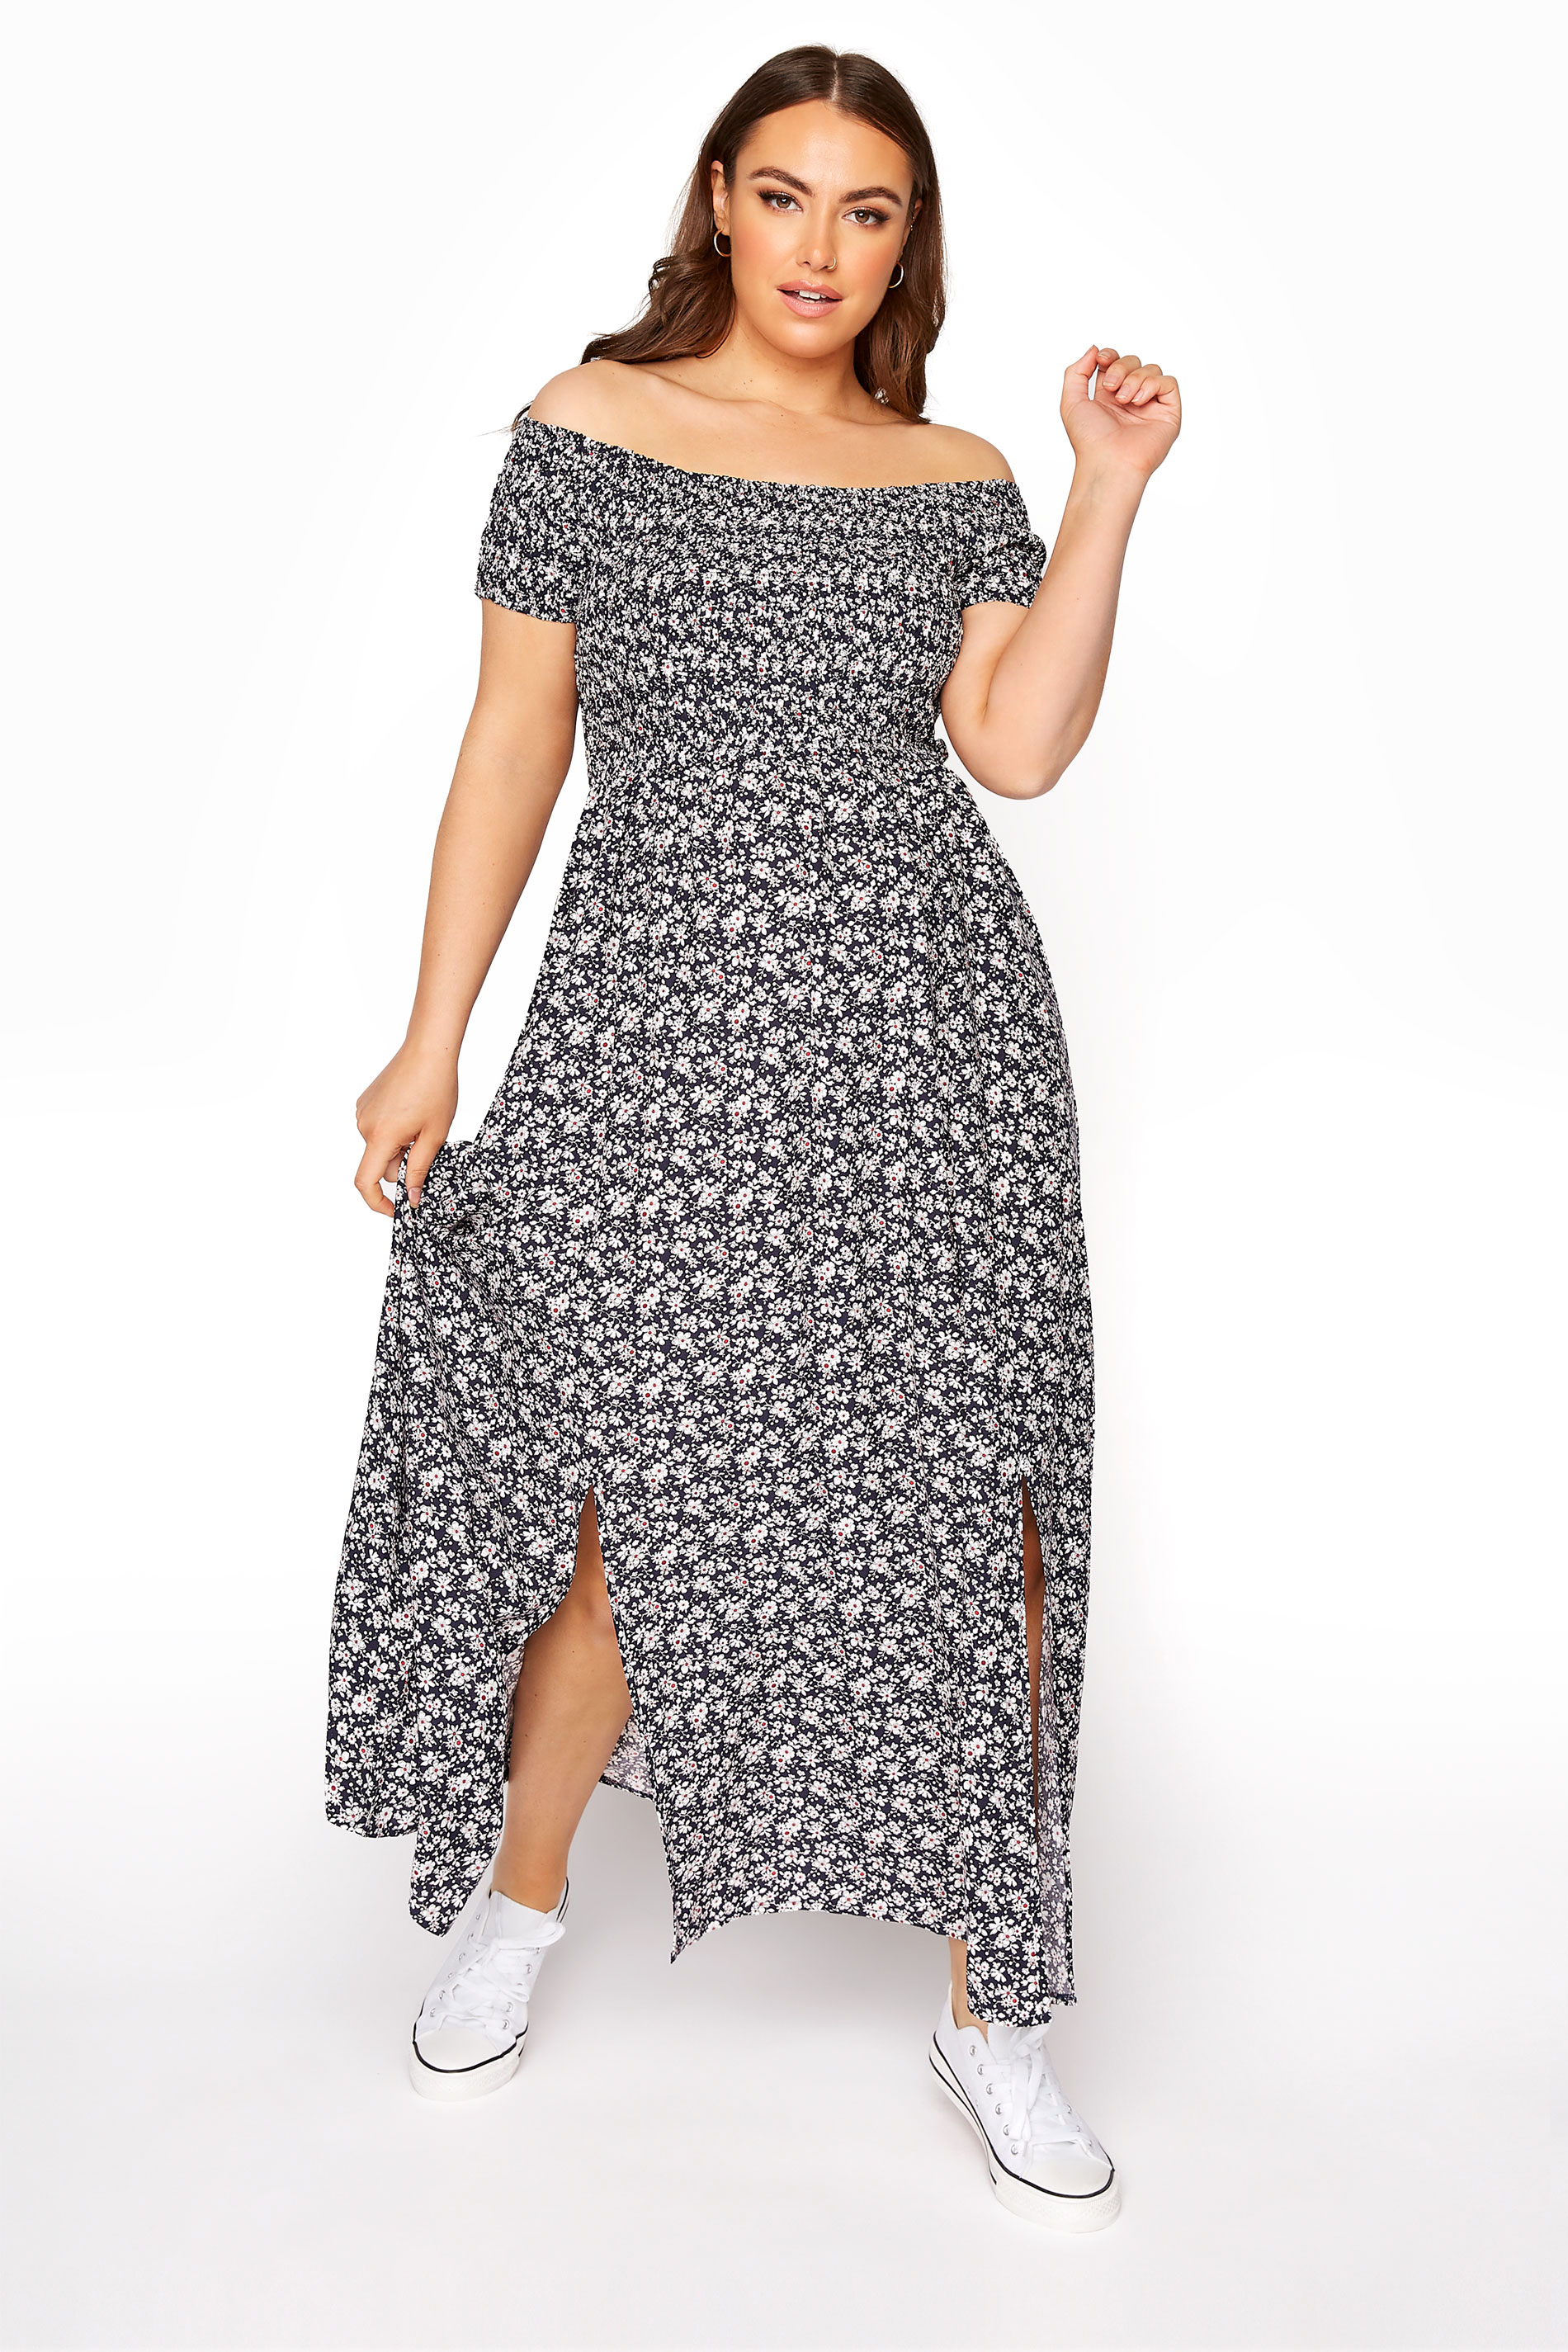 Navy Ditsy Floral Shirred Bardot Maxi Dress | Yours Clothing